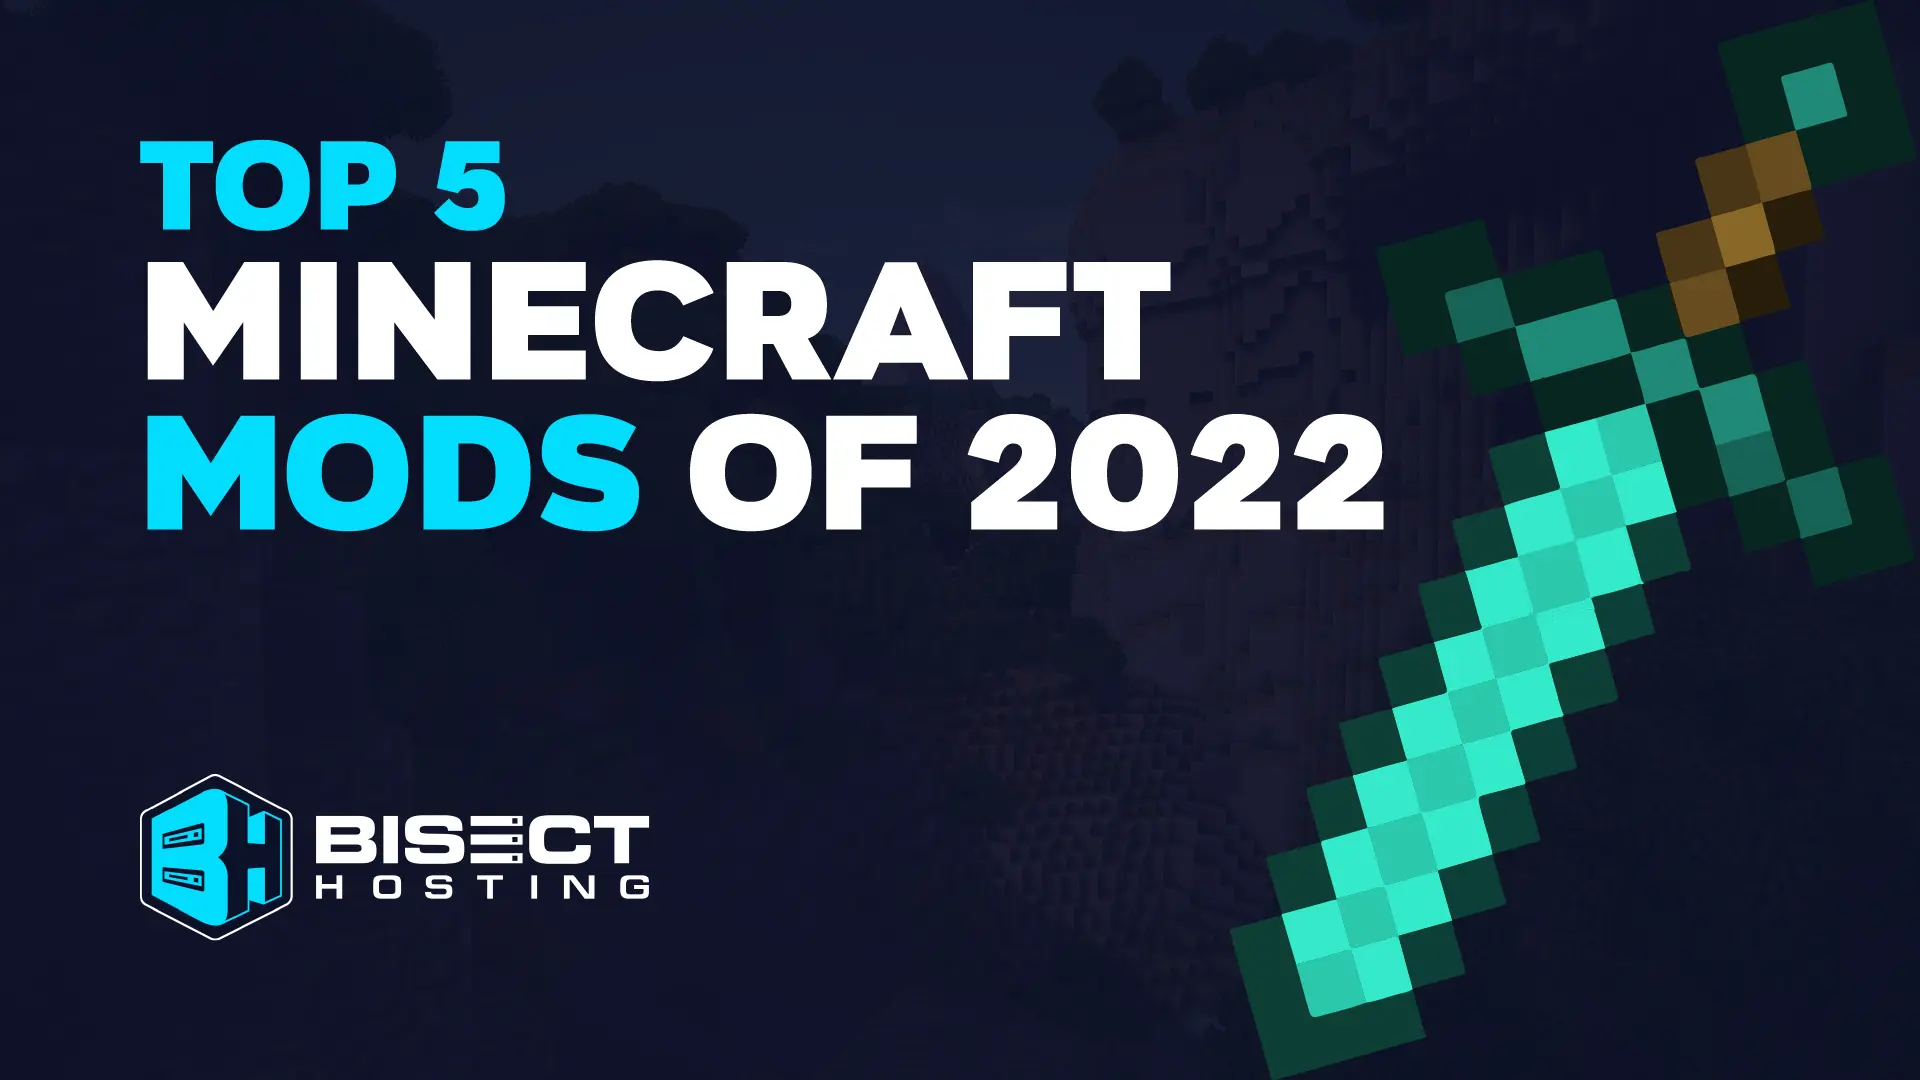 Top 5 Minecraft Mods of 2022